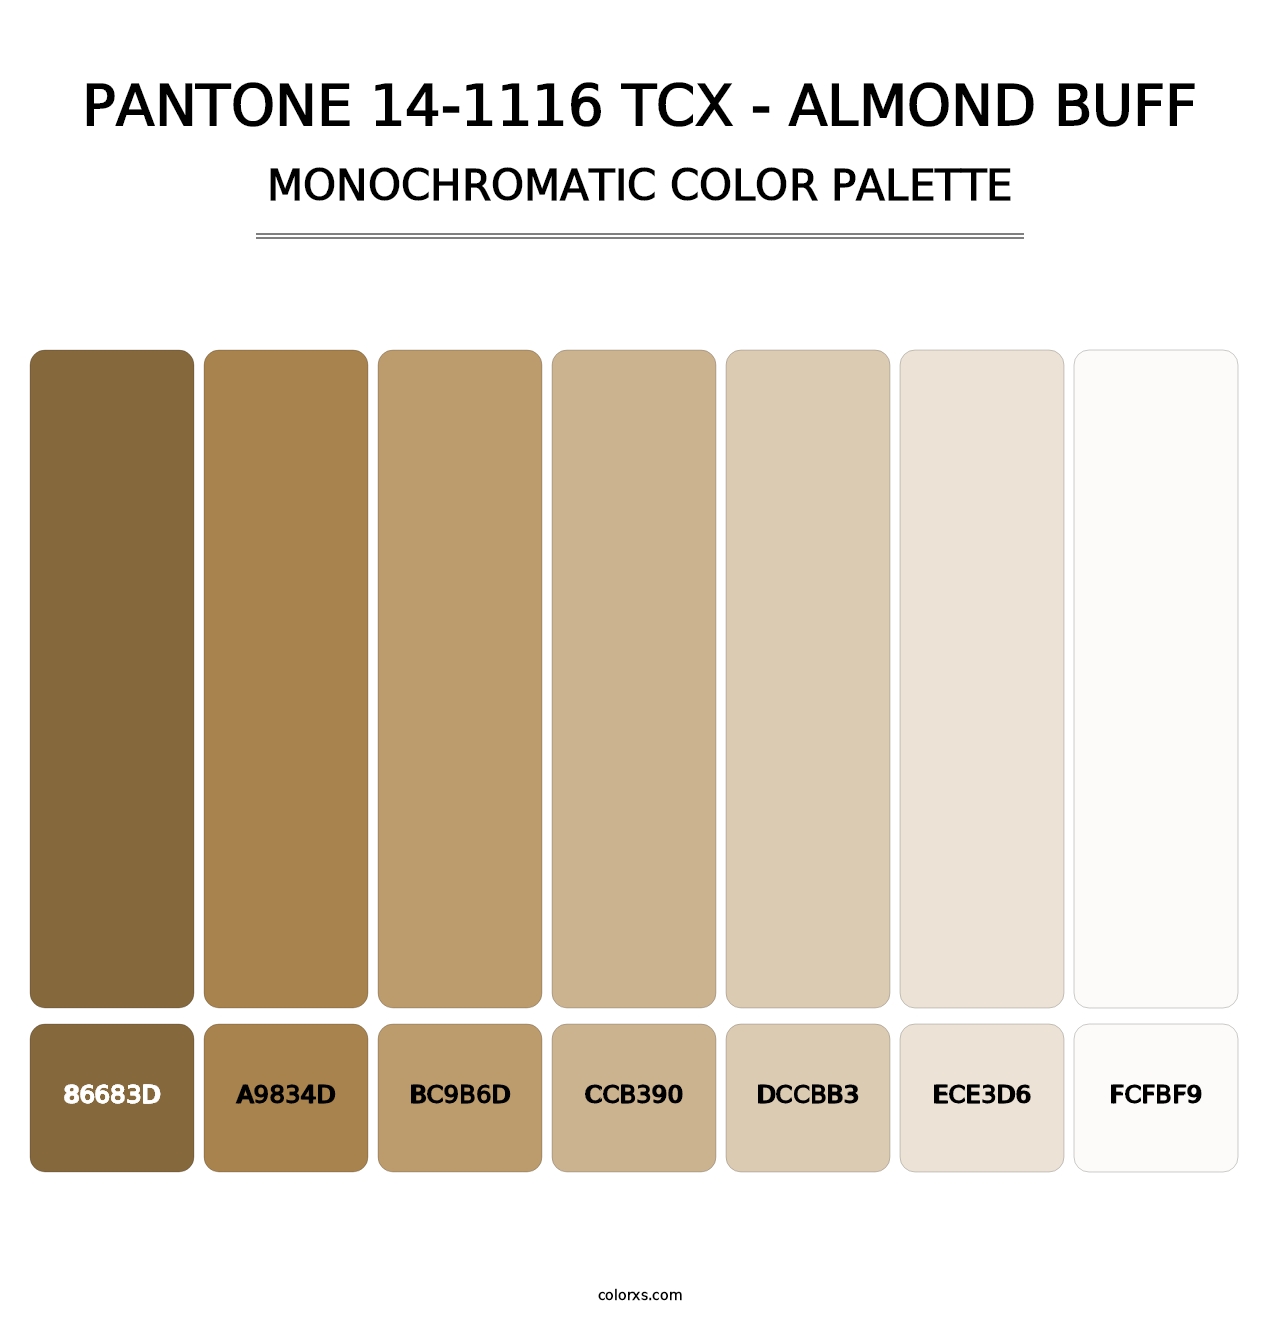 PANTONE 14-1116 TCX - Almond Buff - Monochromatic Color Palette